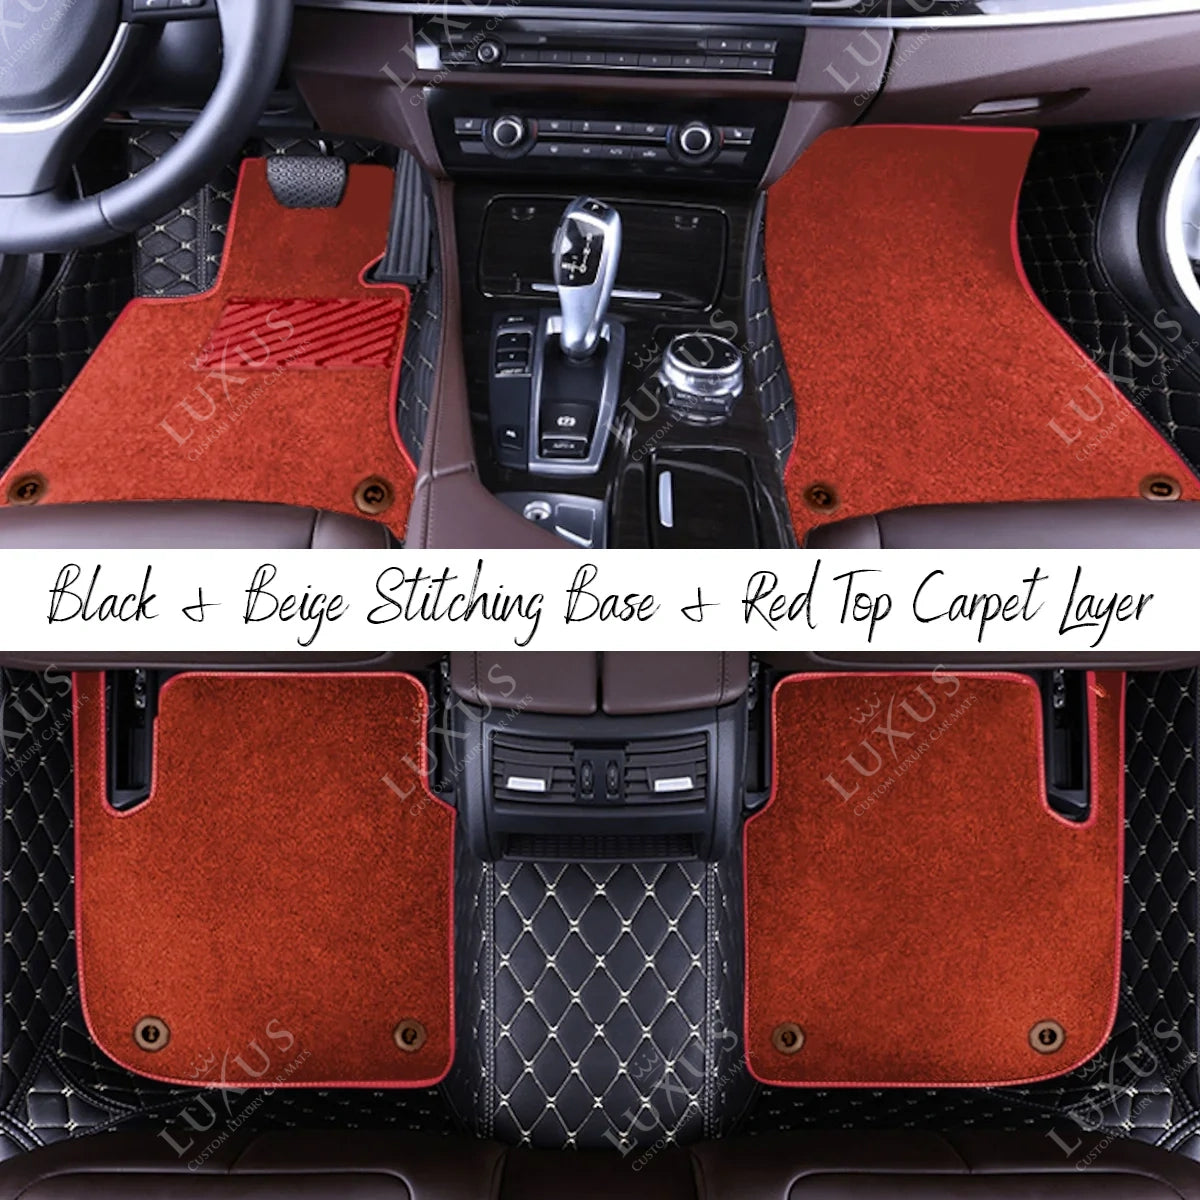 Black & Beige Stitching Diamond Base & Red Top Carpet Double Layer Luxury Car Mats Set